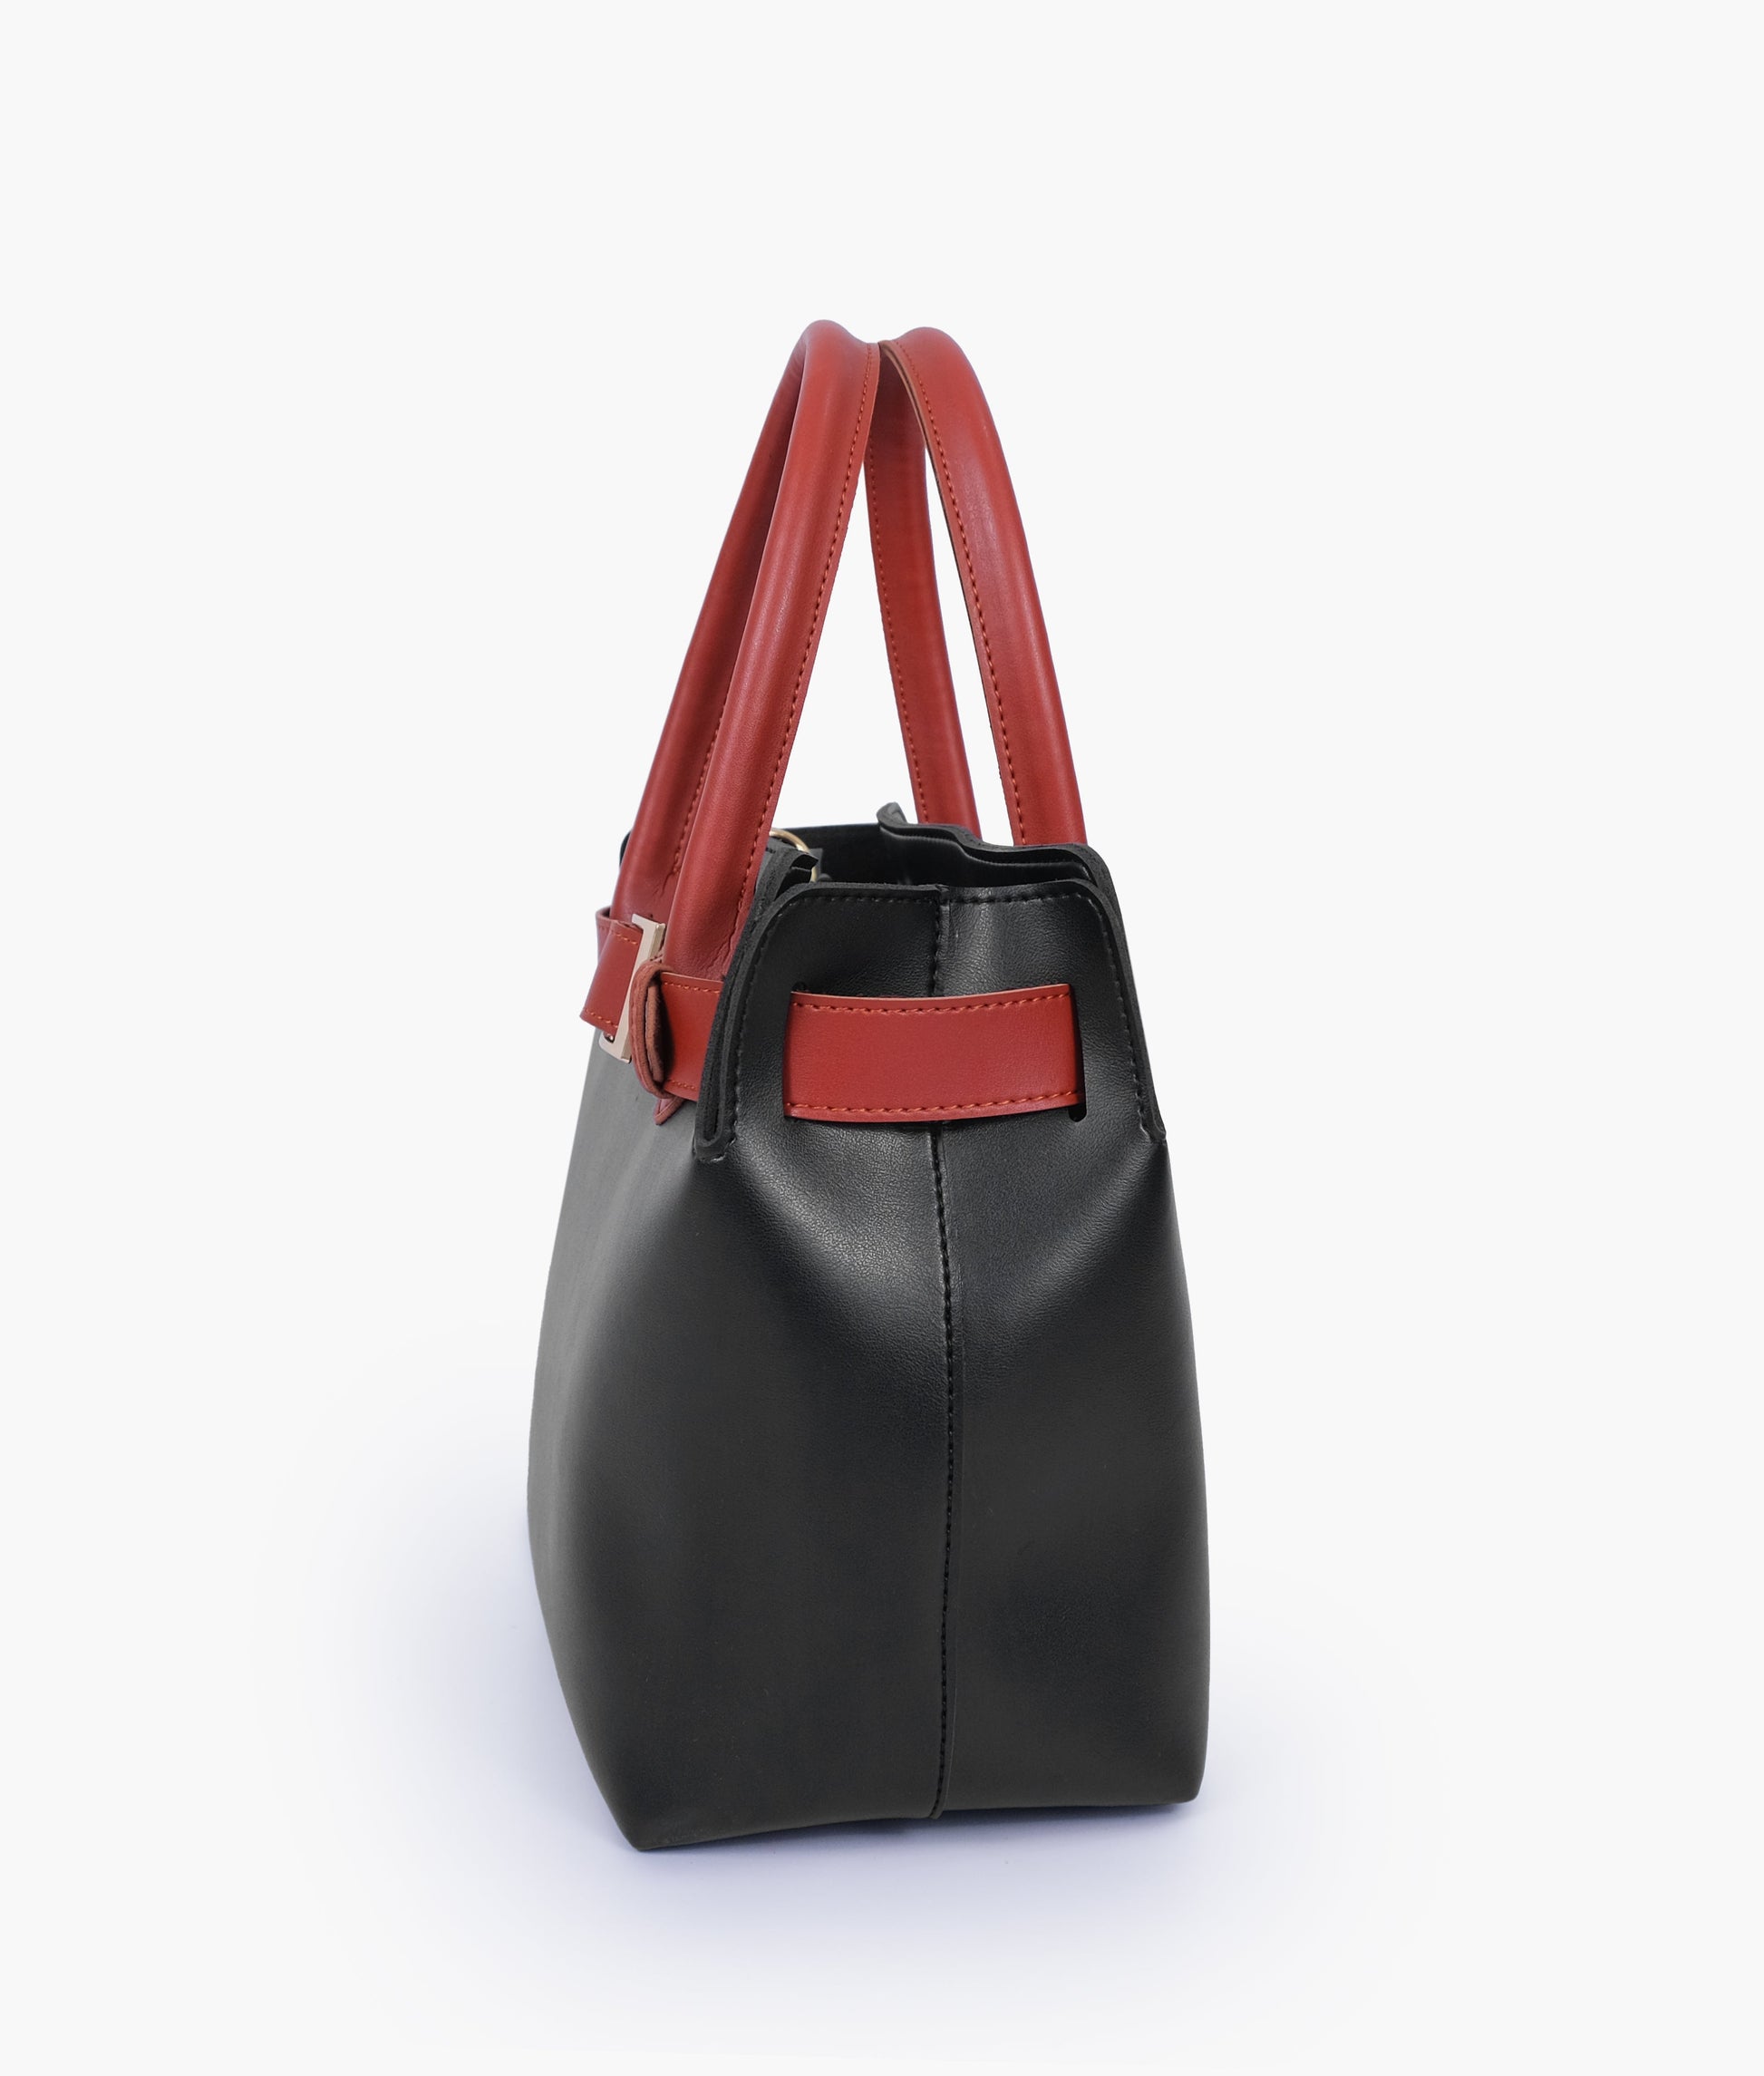 Buy Black Handbag With Front Buckle - Black in Pakistan